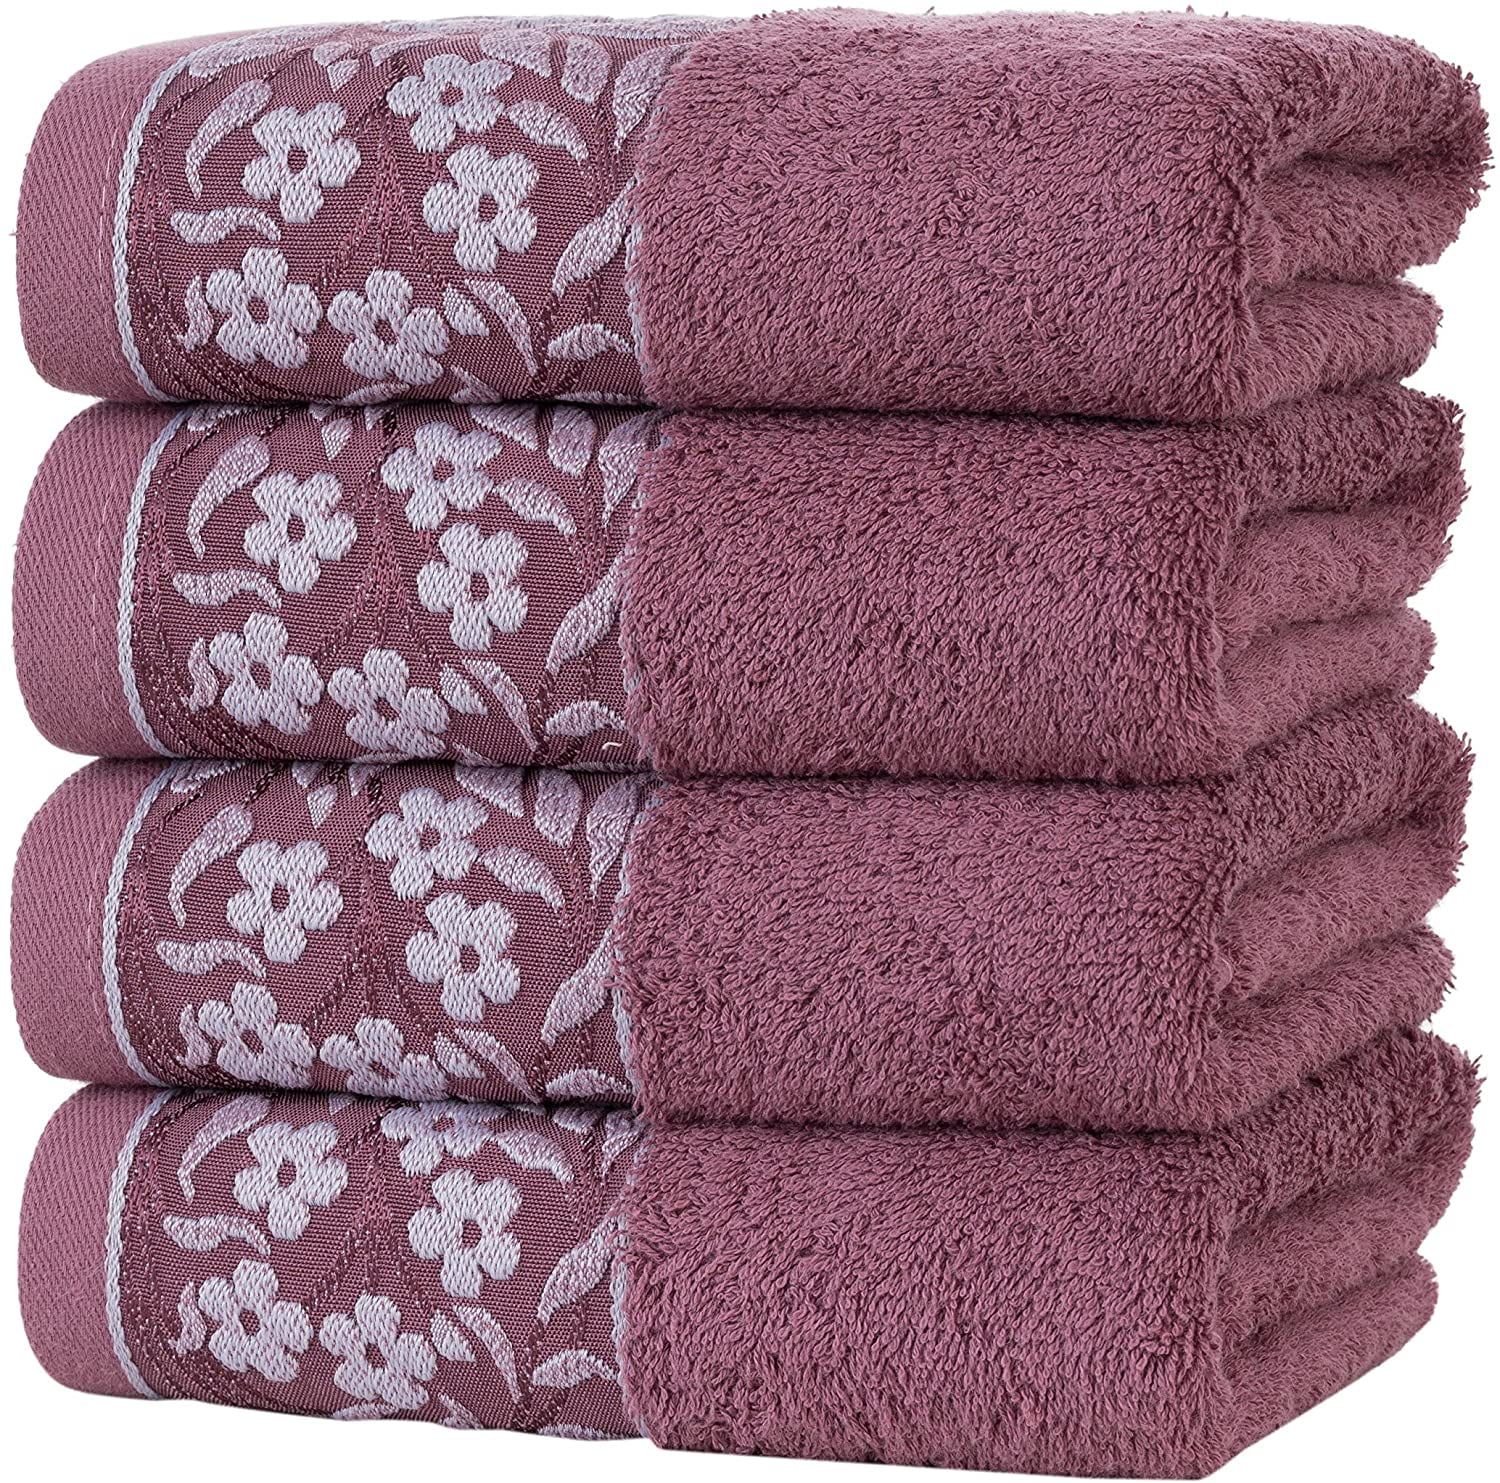 Lahammam turkish dish towels, new 100% Cotton, lilac, set of 4